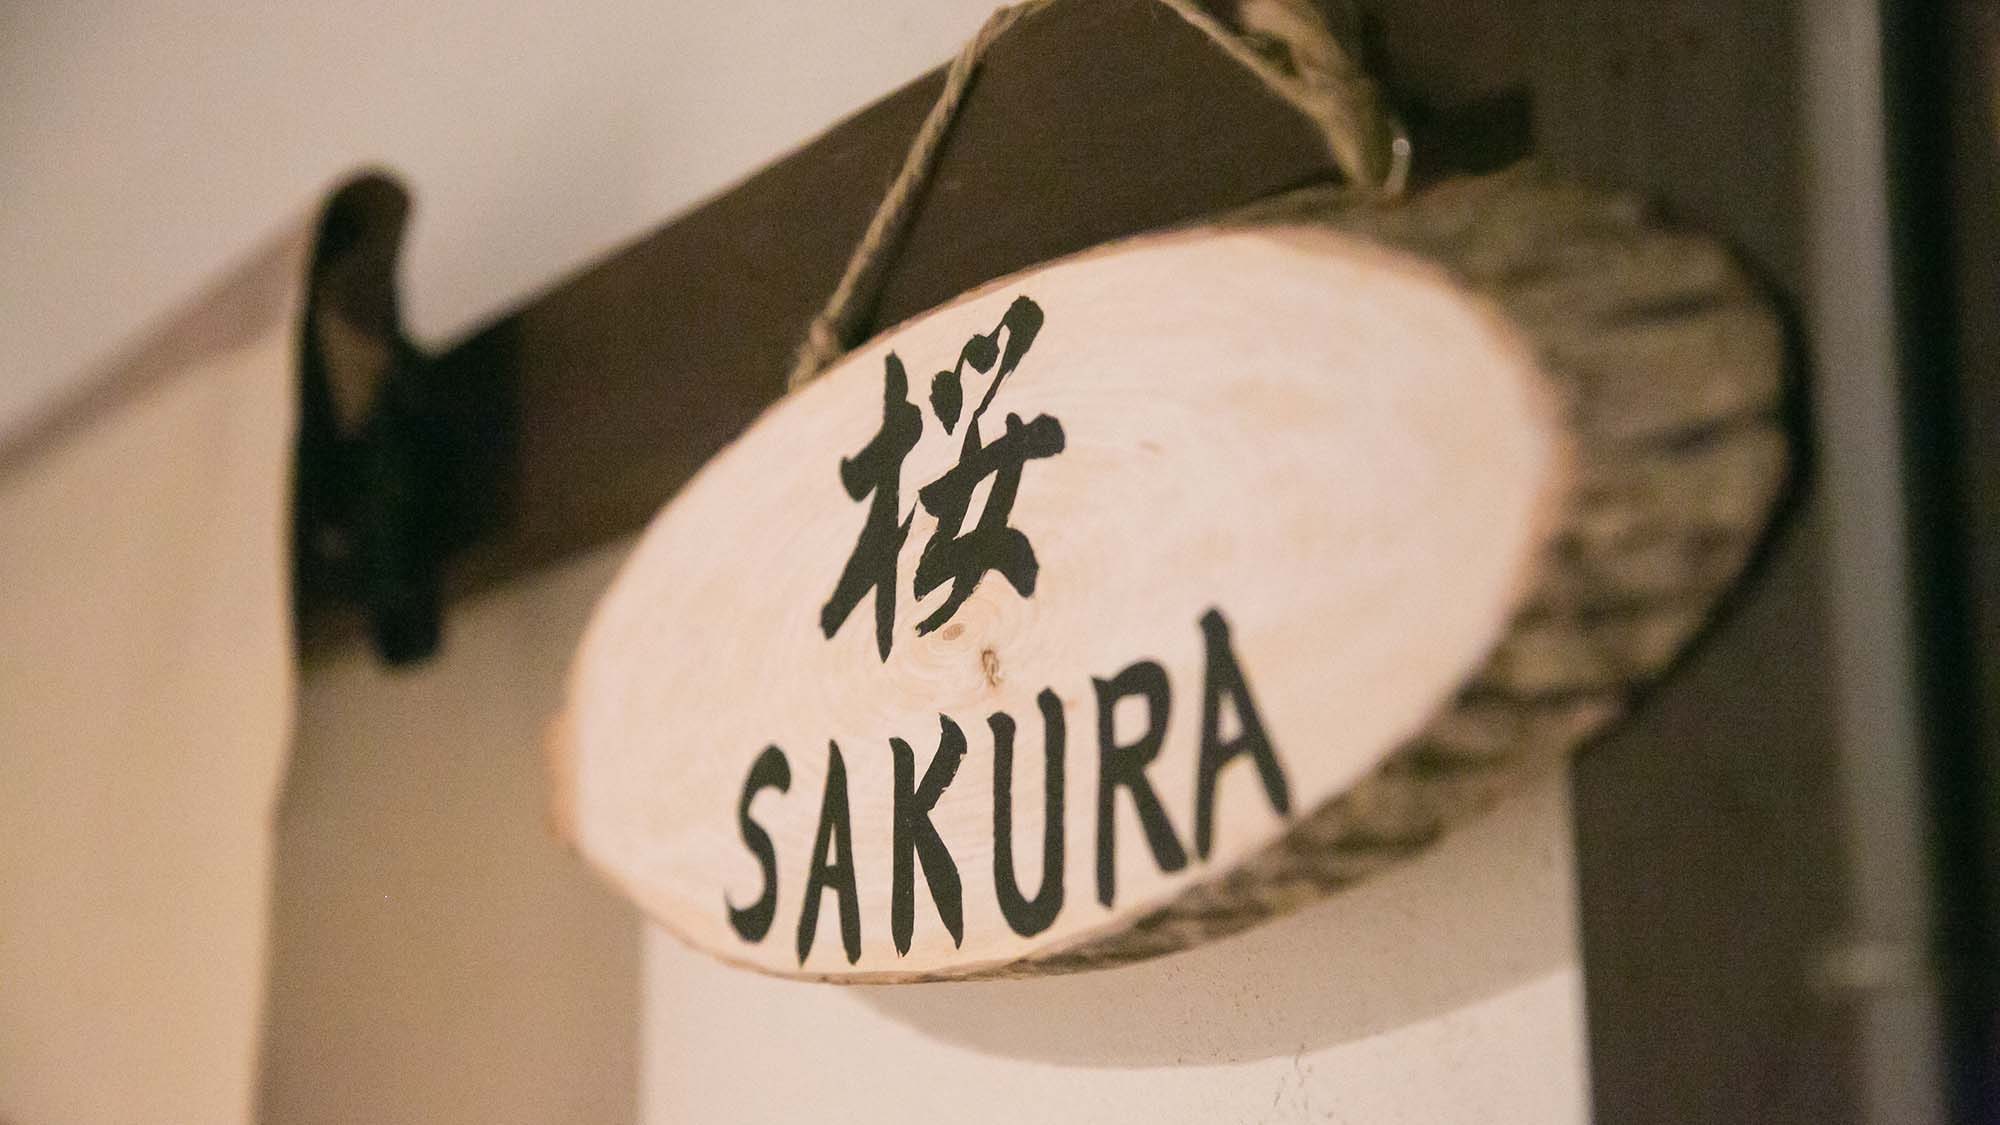 ・ Click here for the "Sakura" room